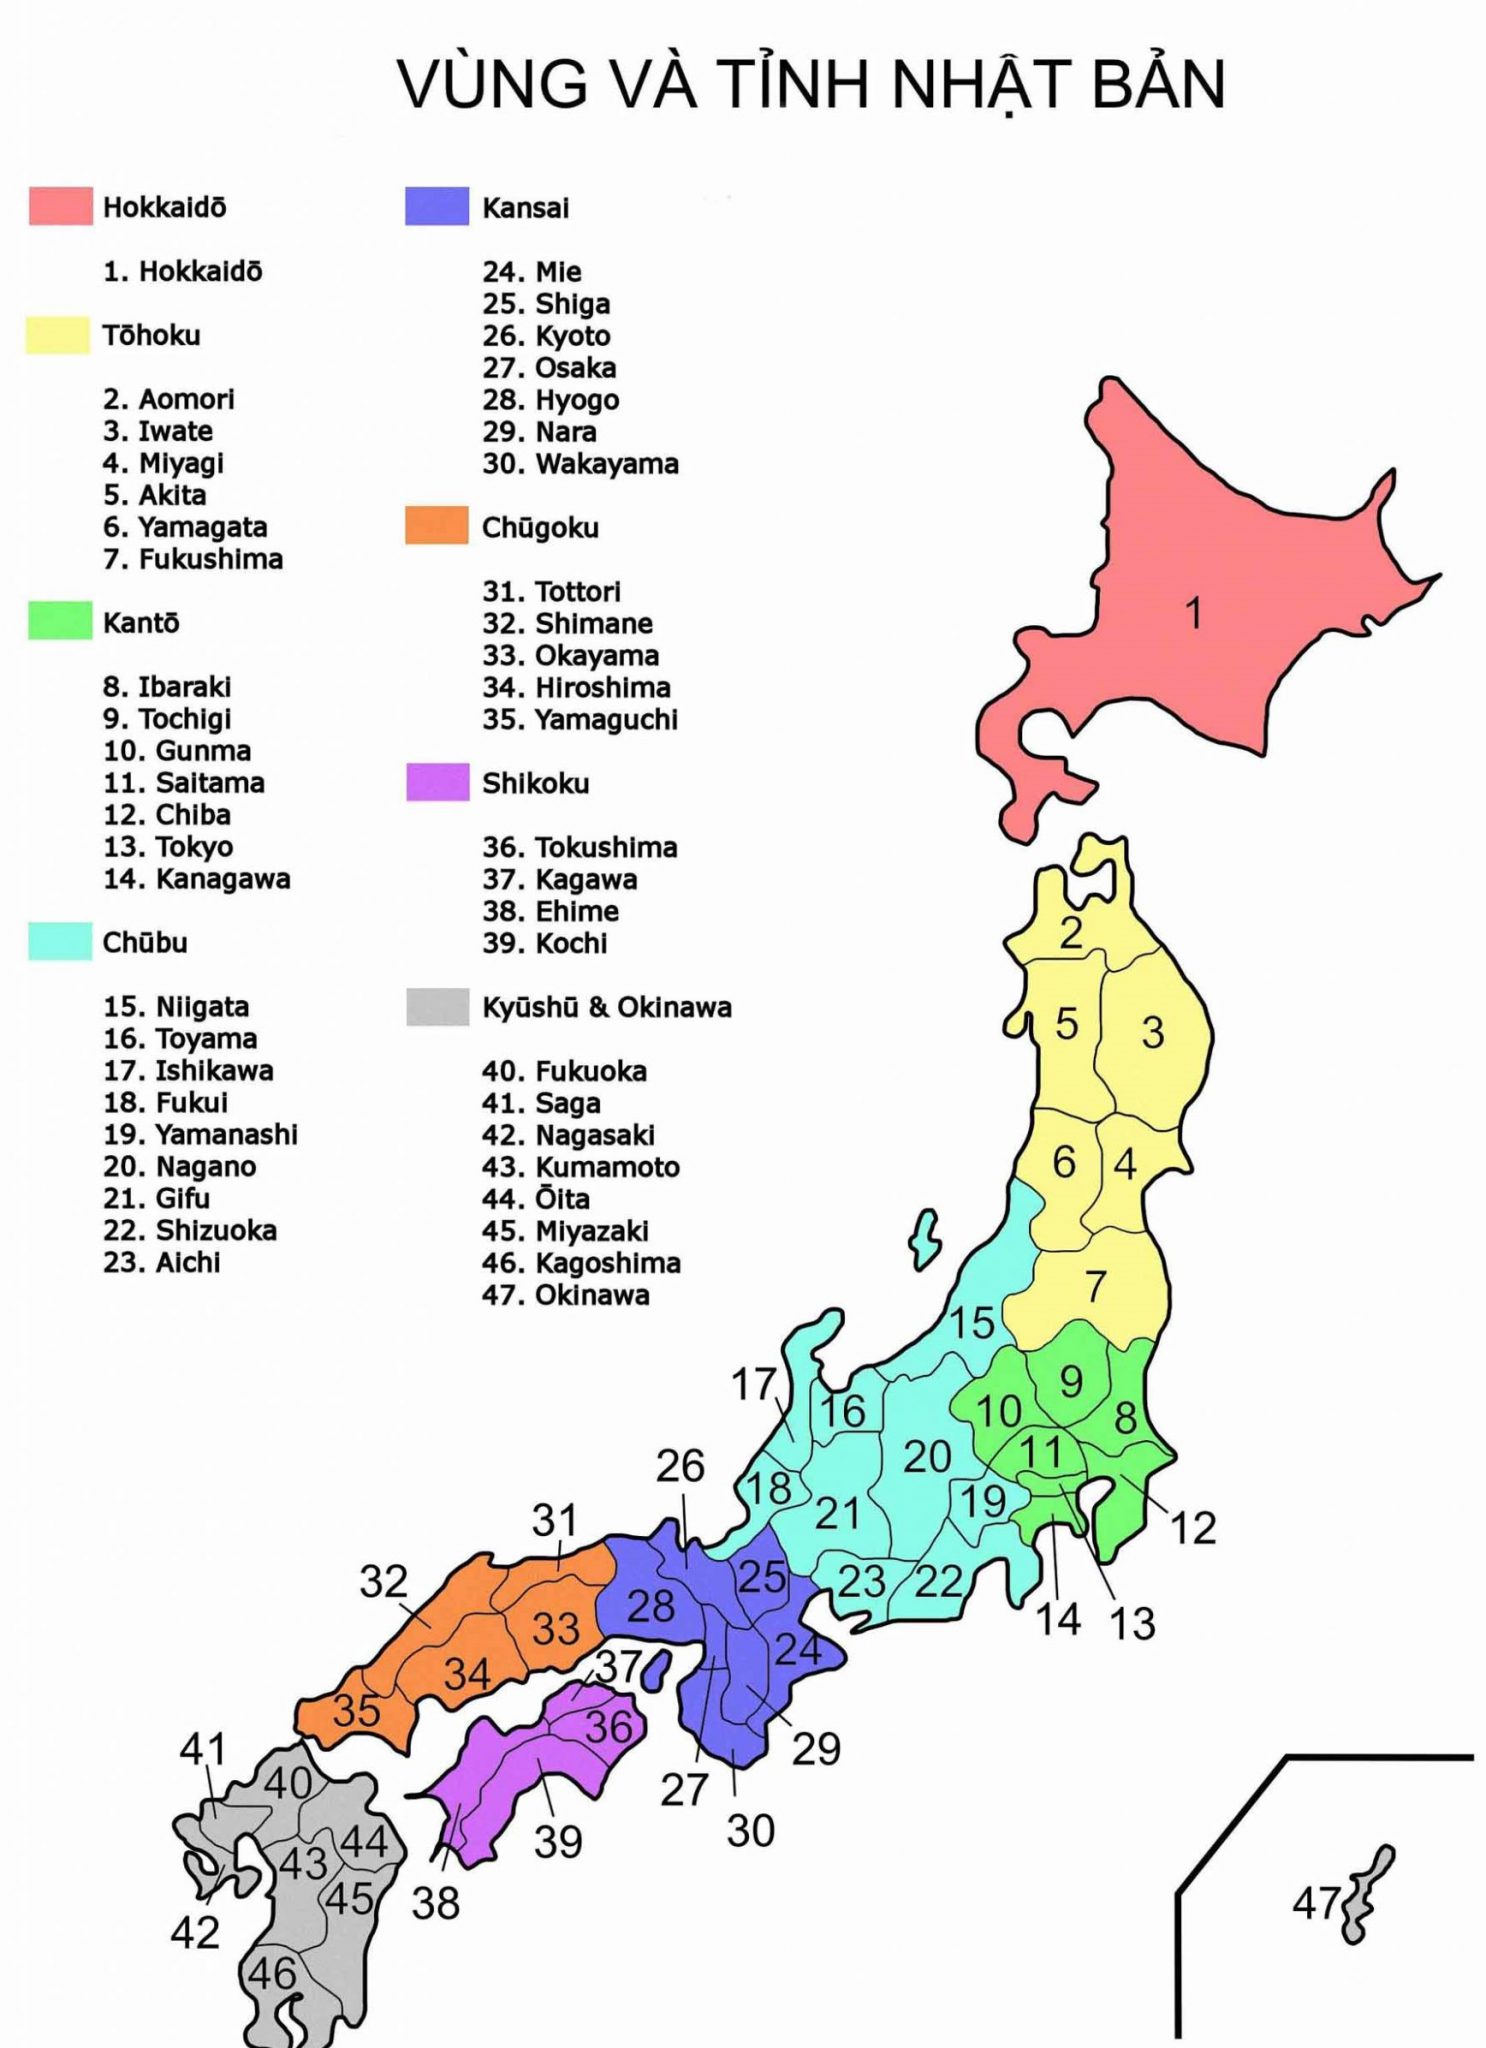 Dịch vụ door to door giao khắp mọi nơi tại Nhật